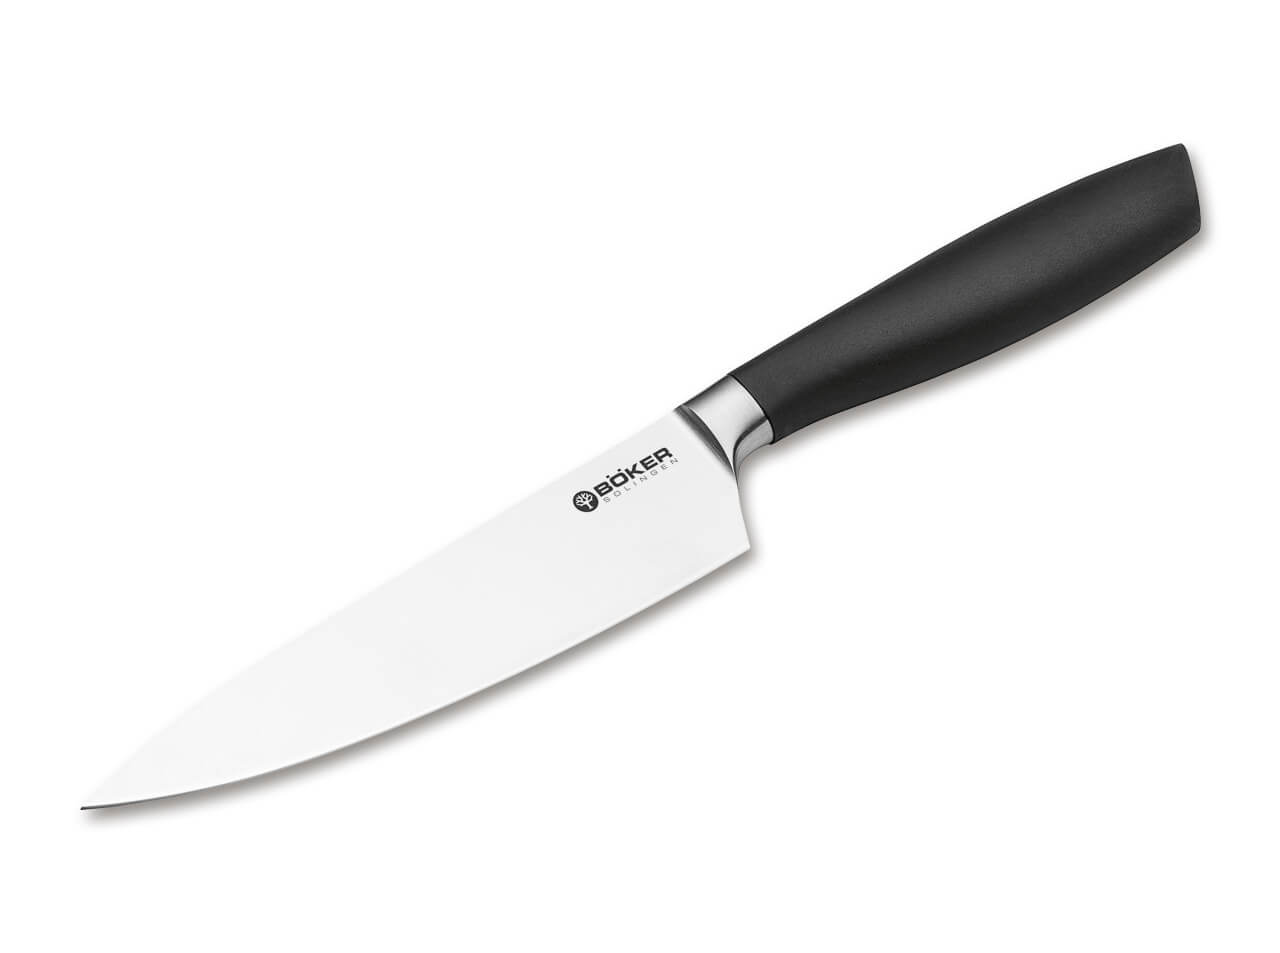 https://www.bokerusa.com/media/image/17/fc/06/boeker-manufaktur-solingen-core-professional-chef-s-knife-small-130820.jpg